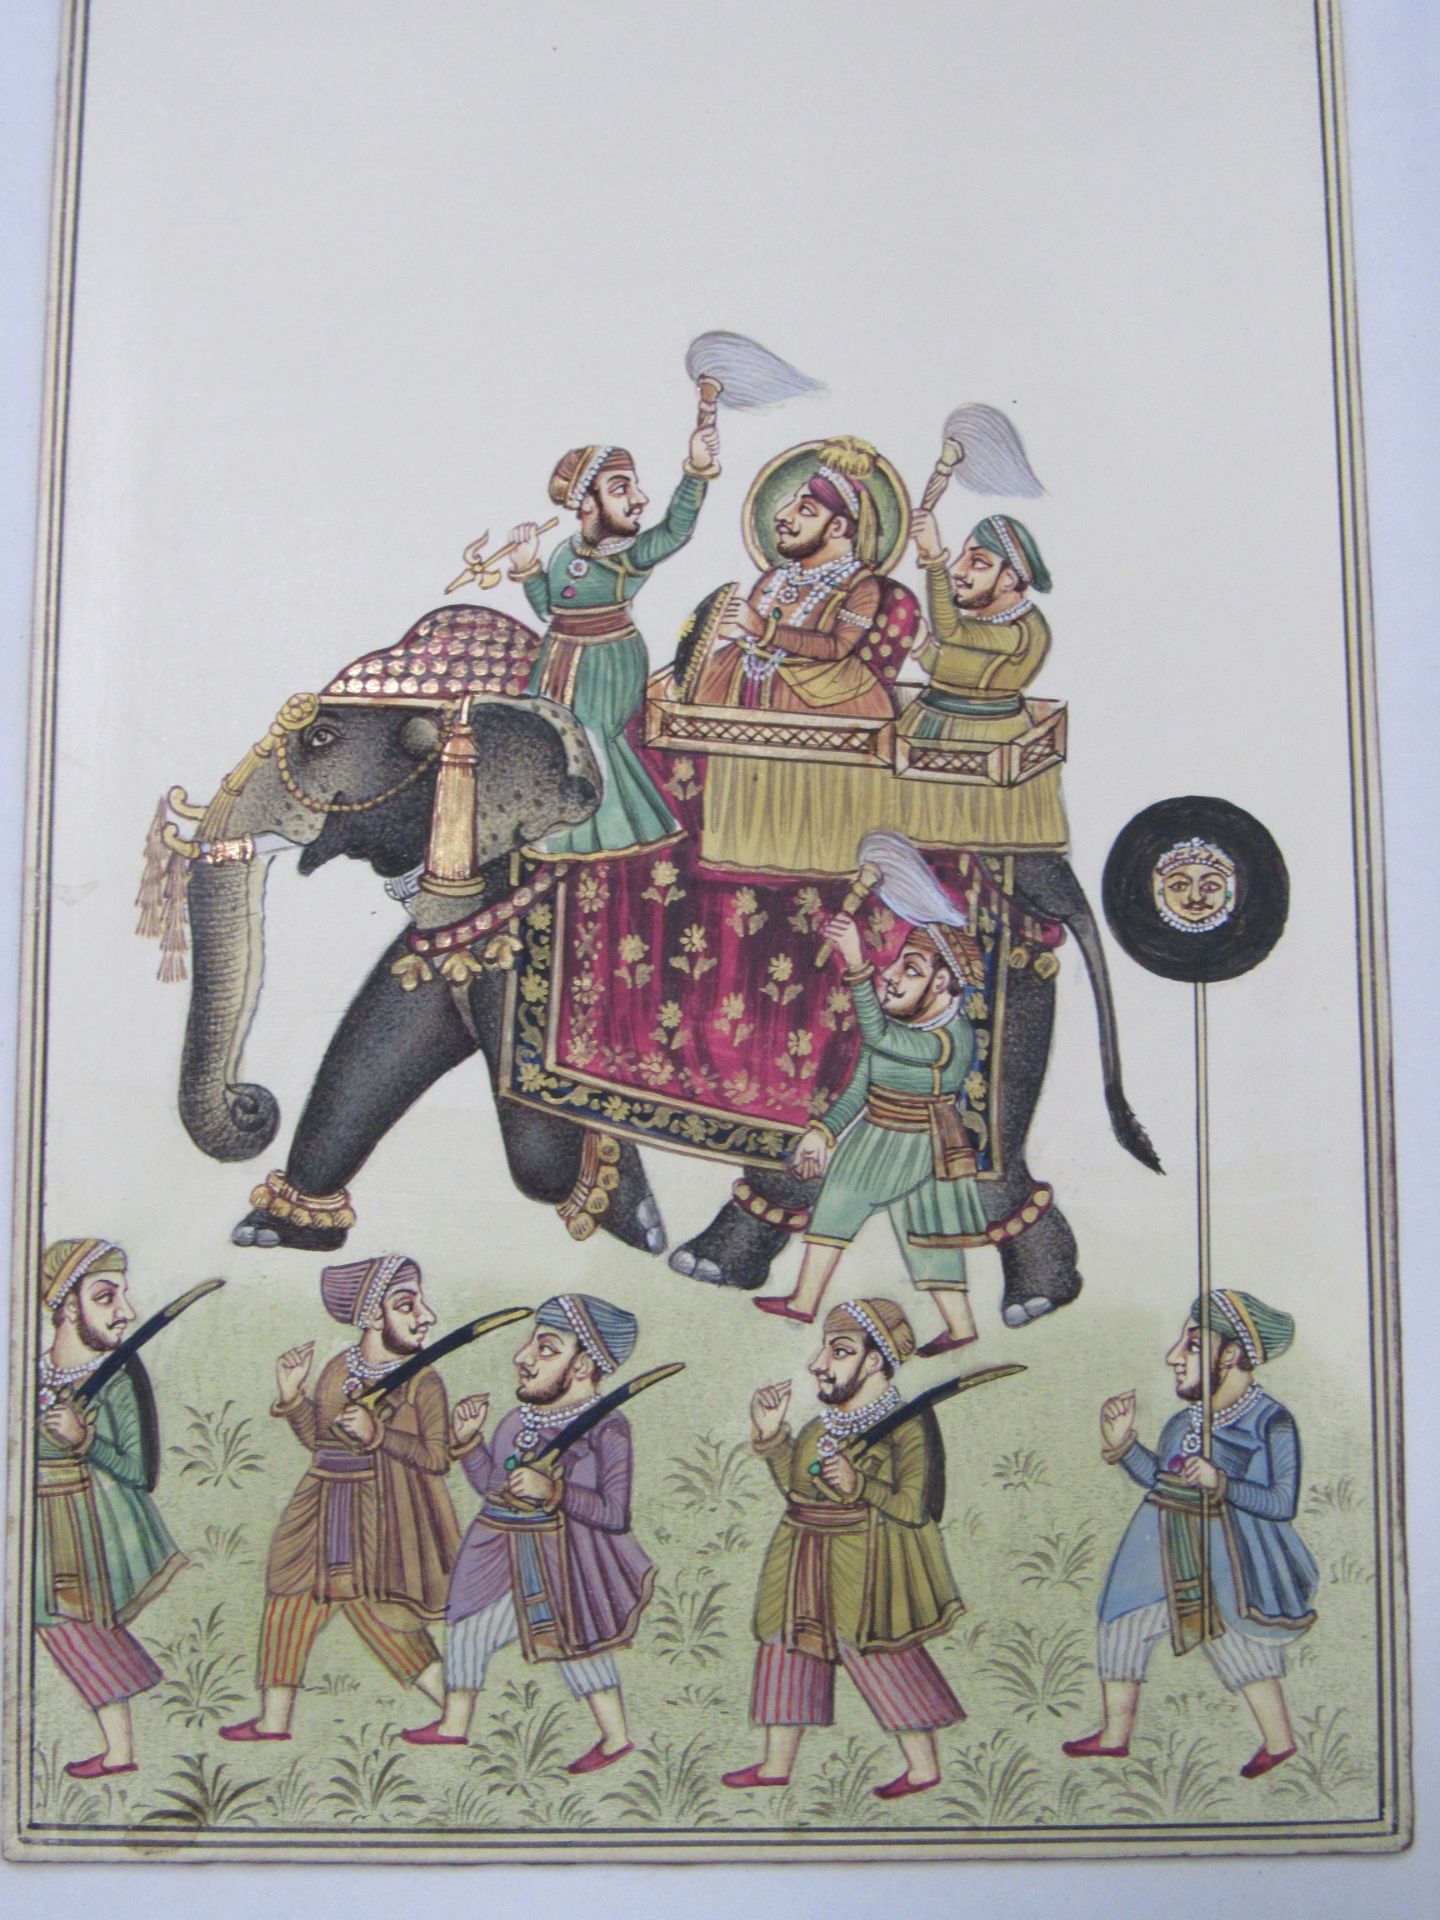 Miniature Indian watercolour of elephant and swordsmen, unframed. Estimate £35-50.